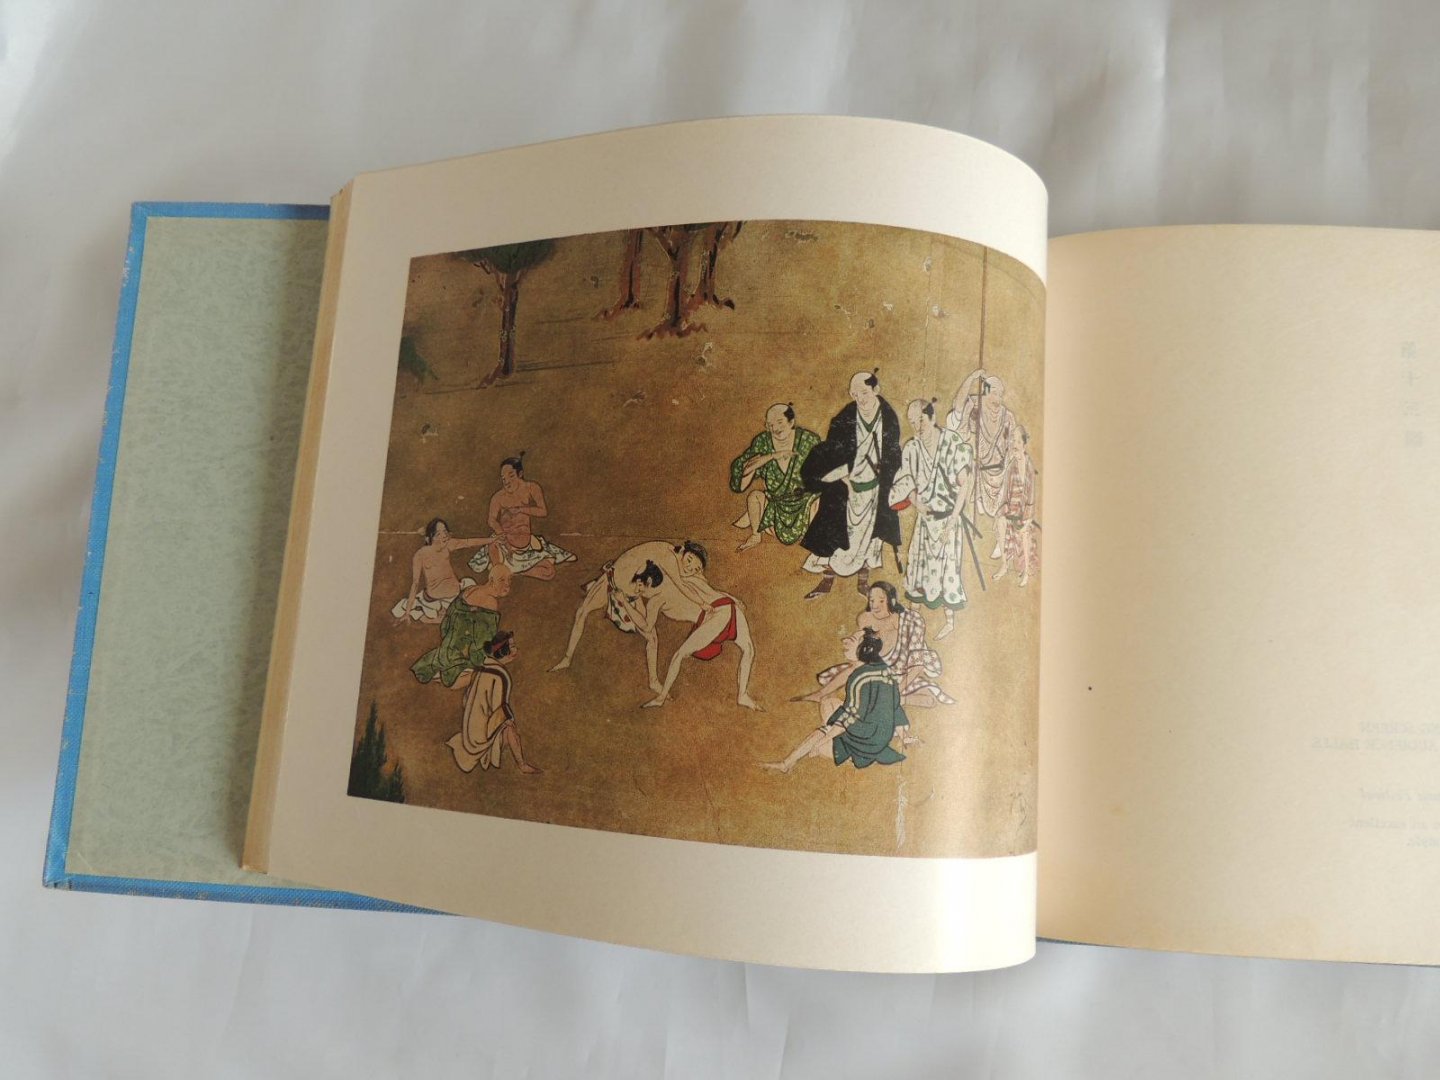  - An Art Album of the Nagoya Castle